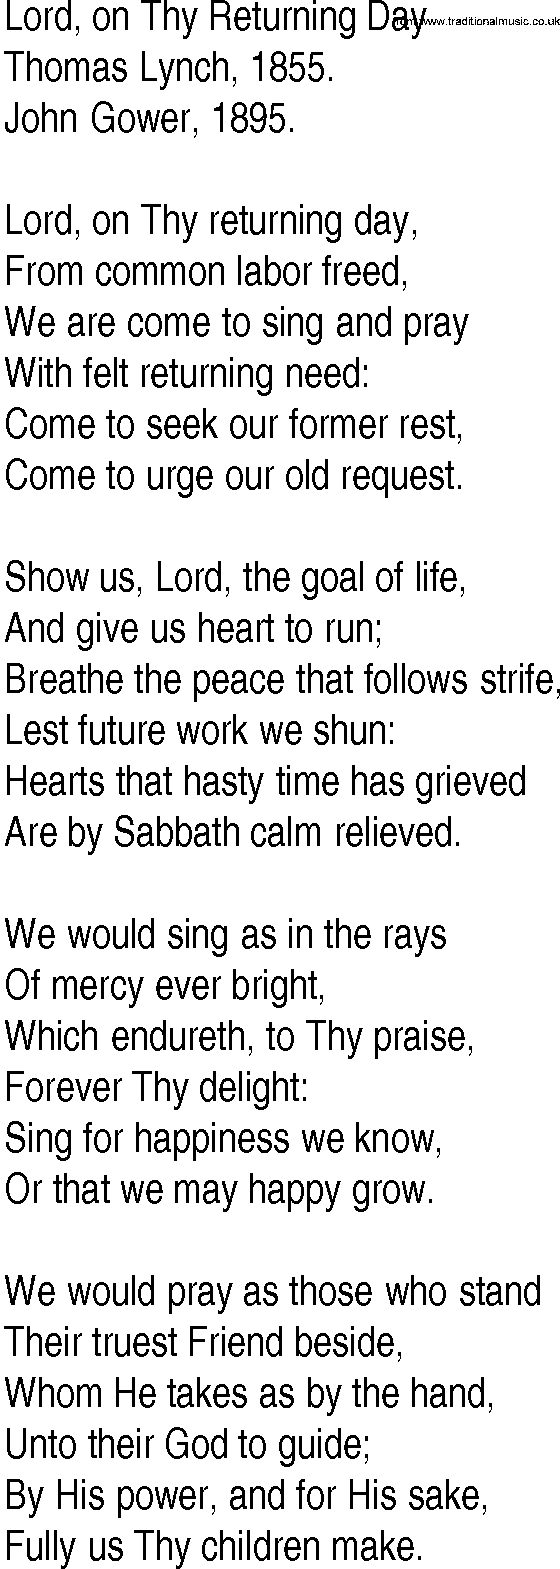 Hymn and Gospel Song: Lord, on Thy Returning Day by Thomas Lynch lyrics